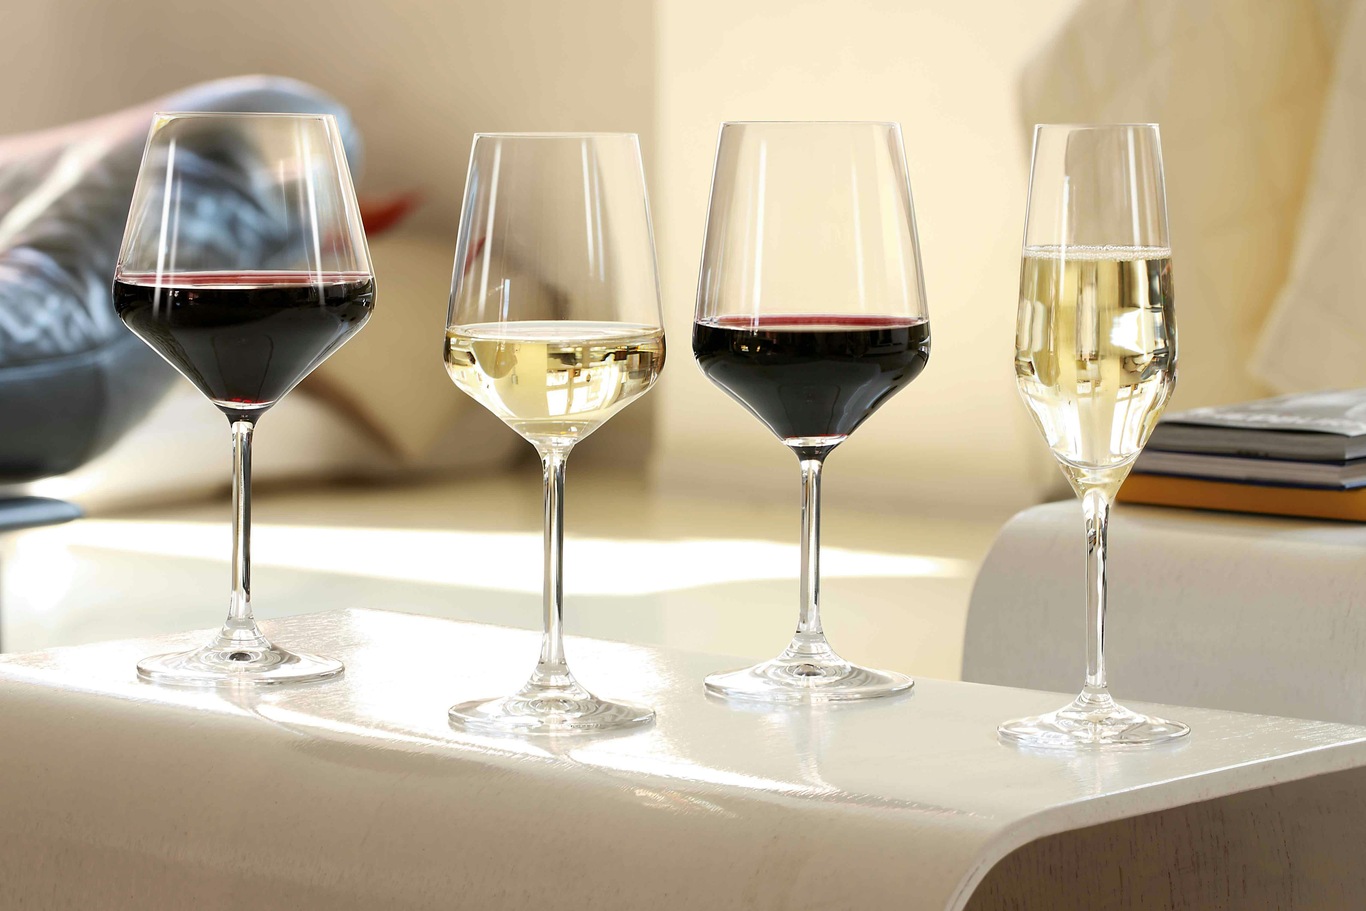 https://royaldesign.com/image/2/spiegelau-style-white-wine-glass-set-of-4-44-cl-1?w=800&quality=80